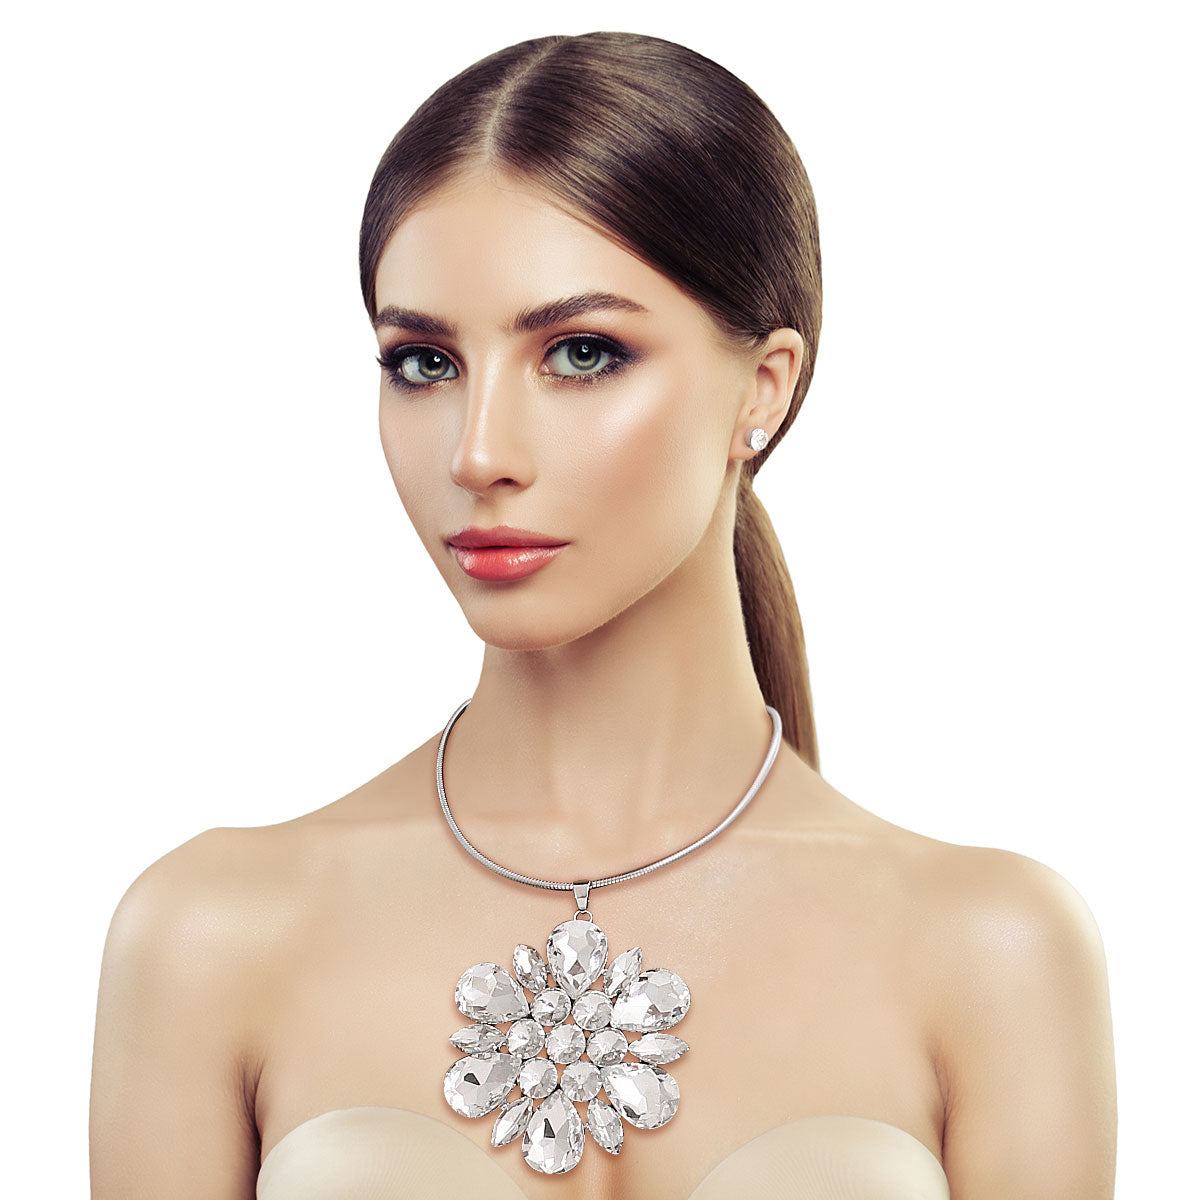 Silver Teardrop Crystal Pendant Necklace